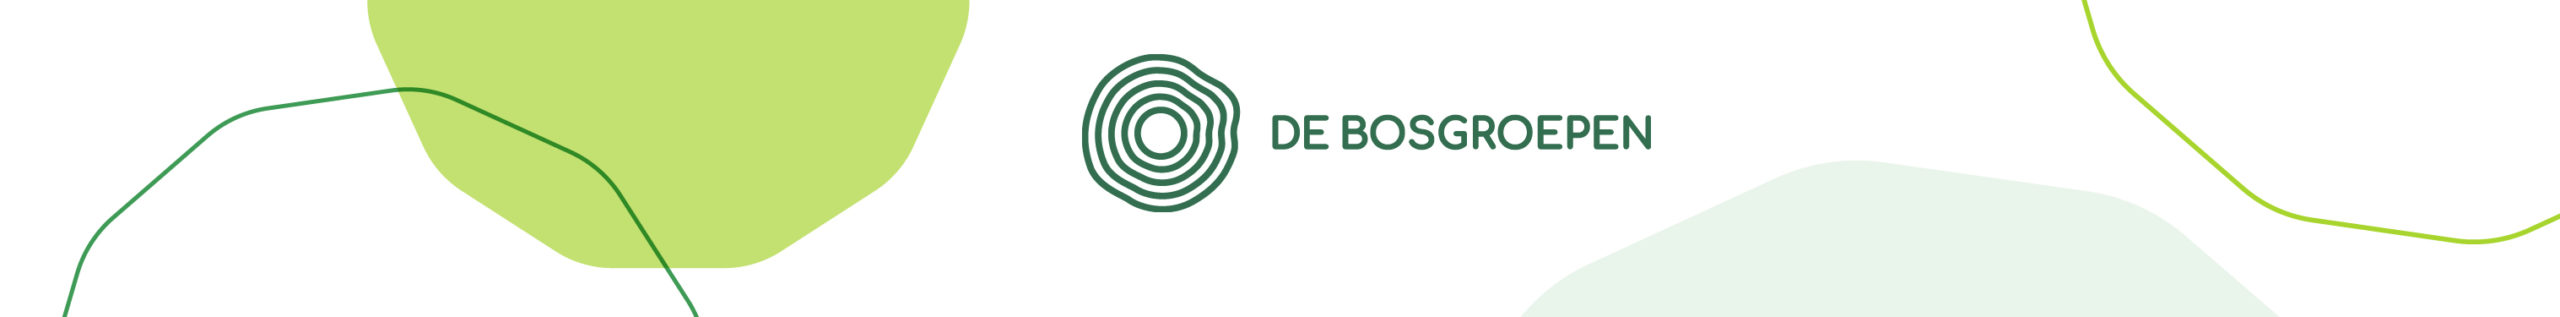 Bosgroep Oost-Vlaanderen logo